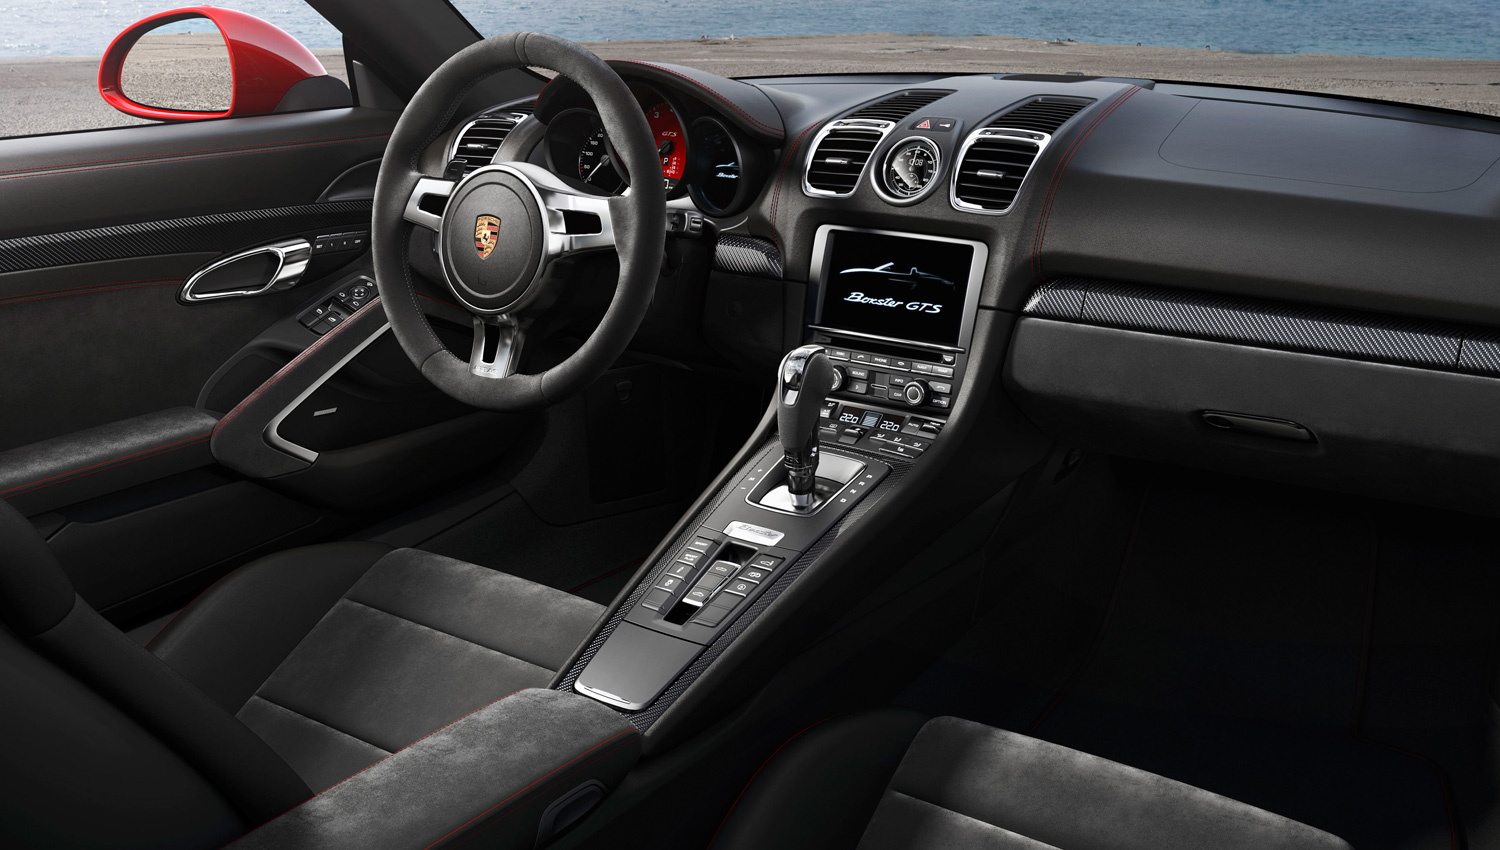 Interior of the new Porsche Boxster GTS